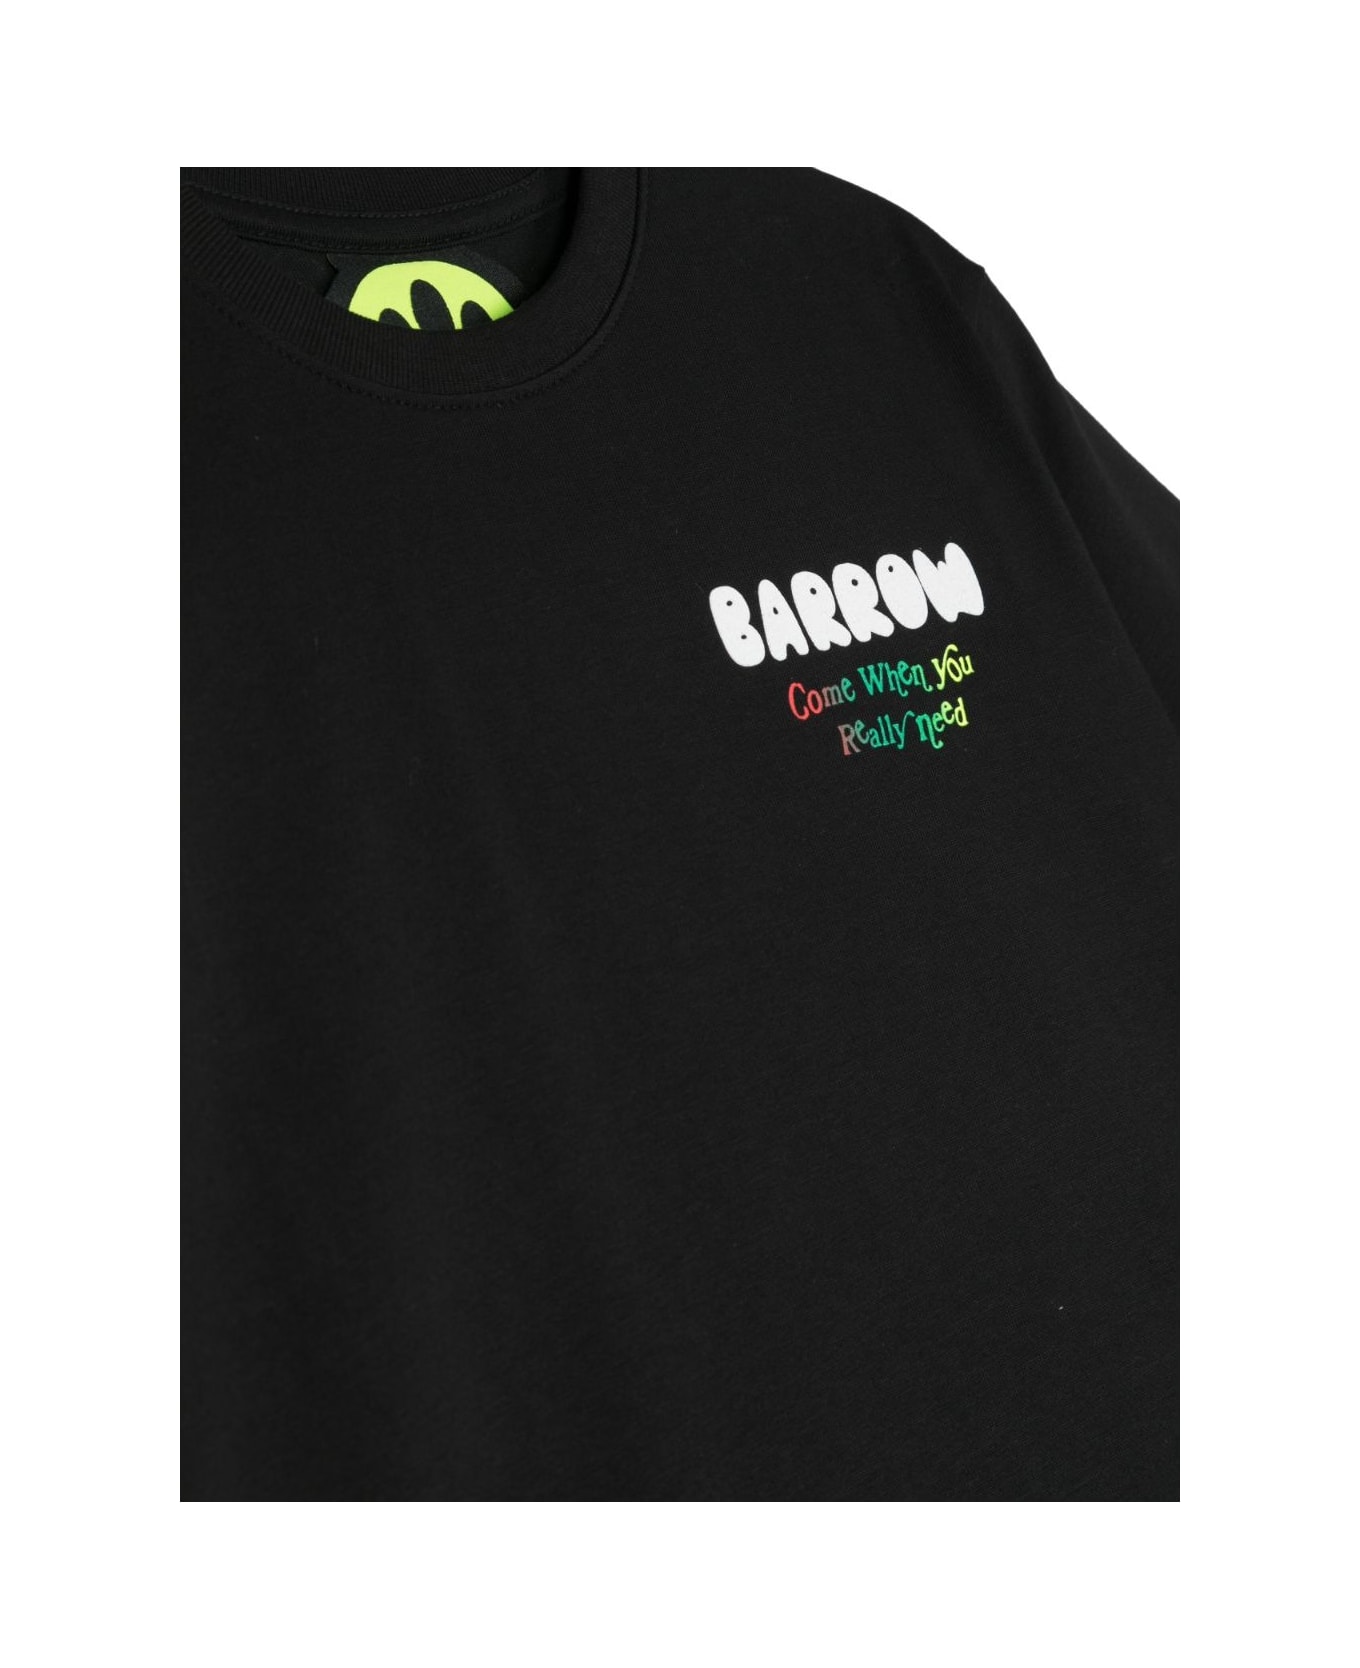 Barrow Black T-shirt With Multicoloured Lettering Logo - Nero/black